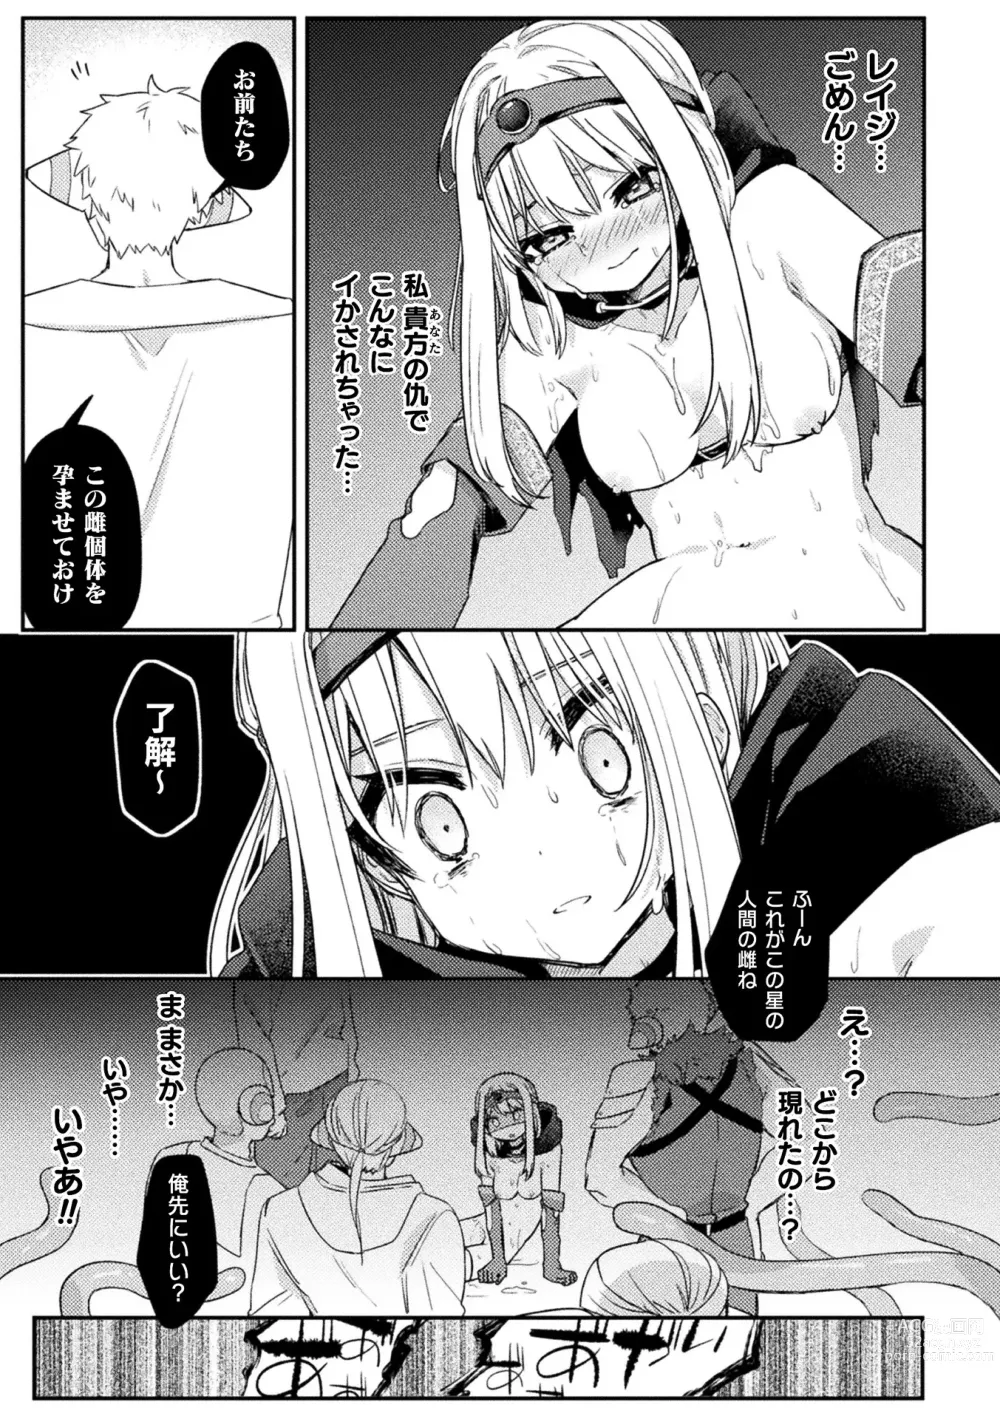 Page 143 of manga Kukkoro Heroines Vol. 29